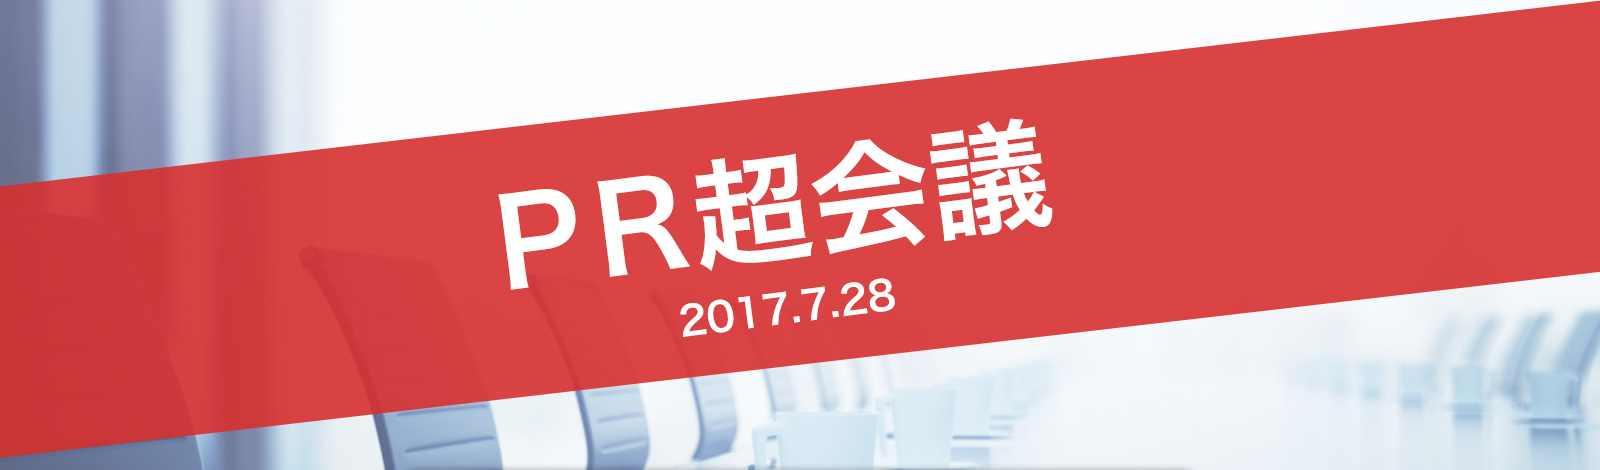 PR超会議 2017.7.28